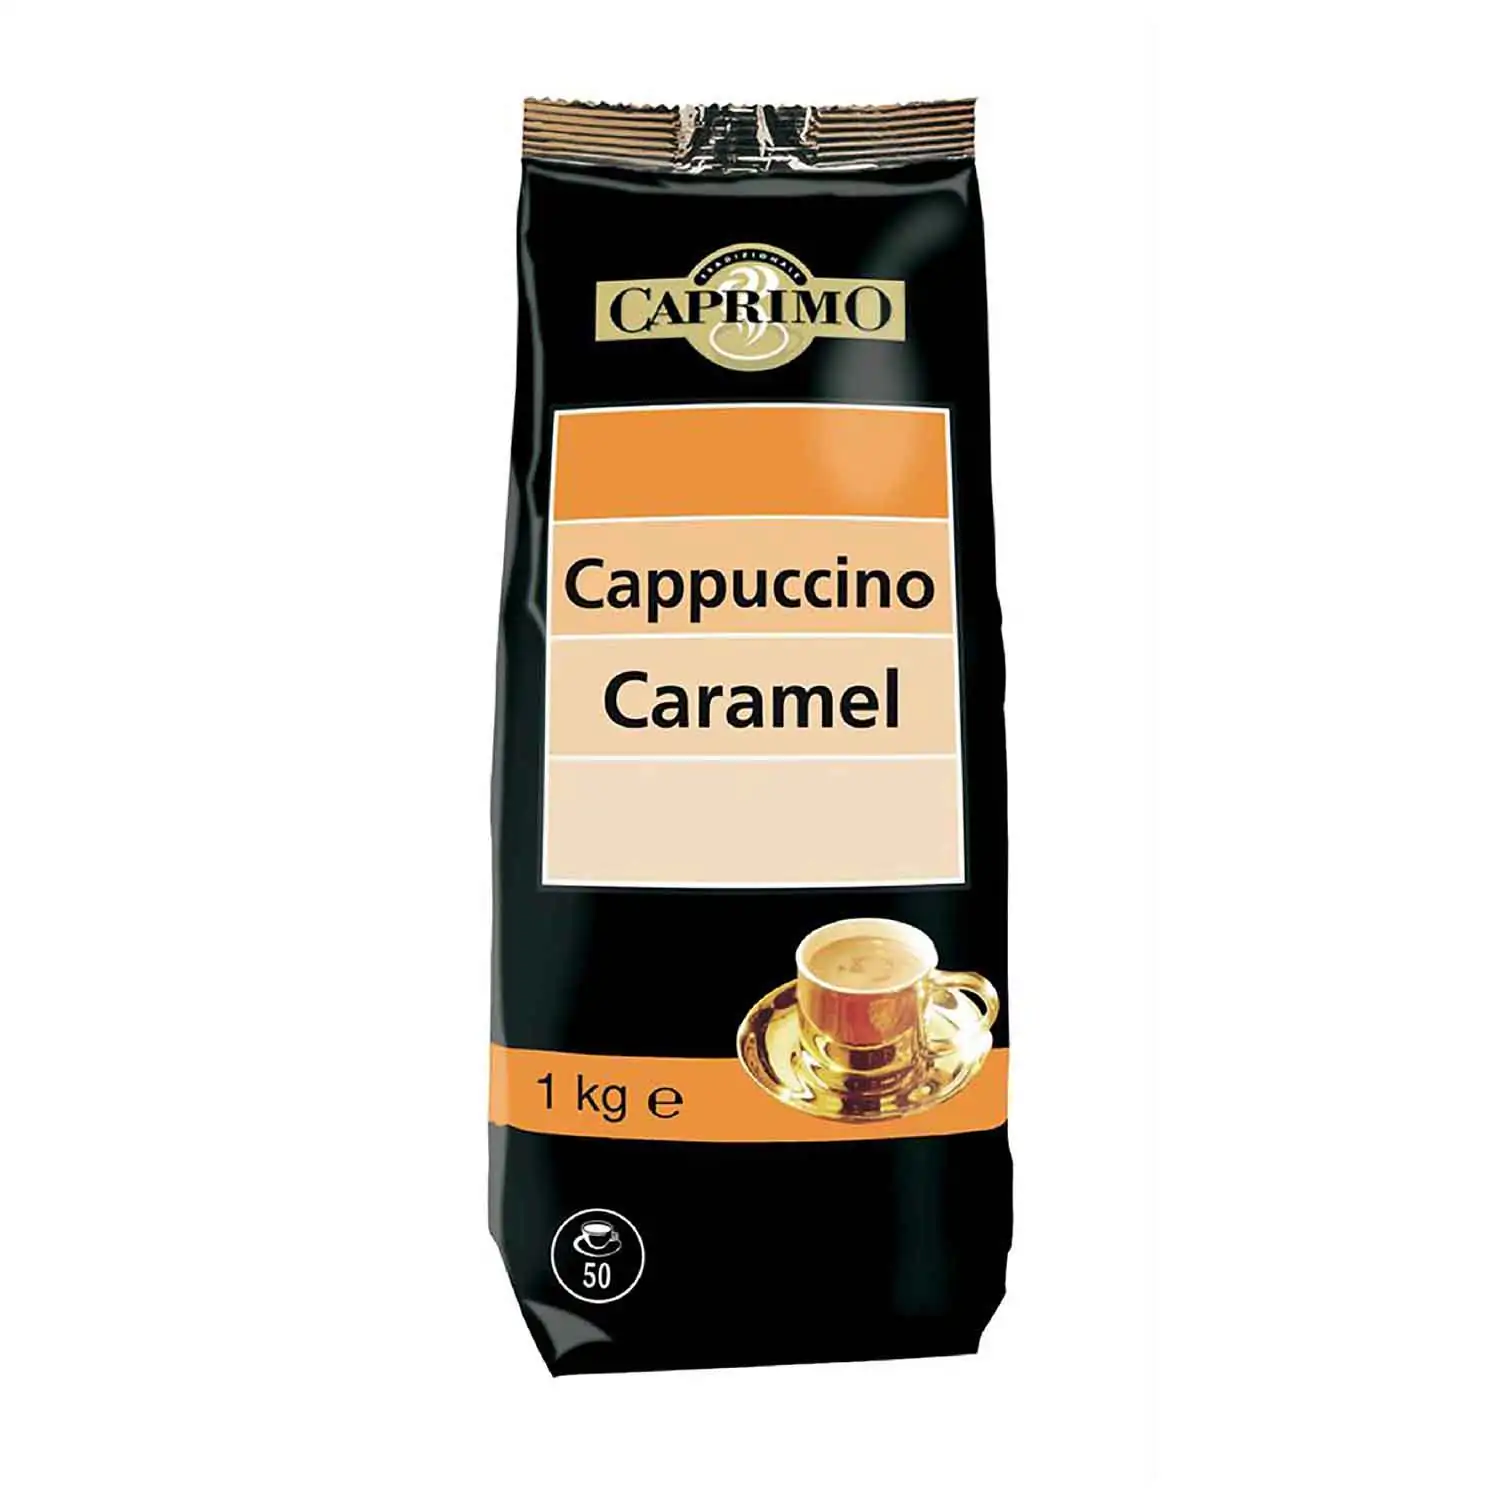 Caprimo cappuccino caramel 1kg - Buy at Real Tobacco